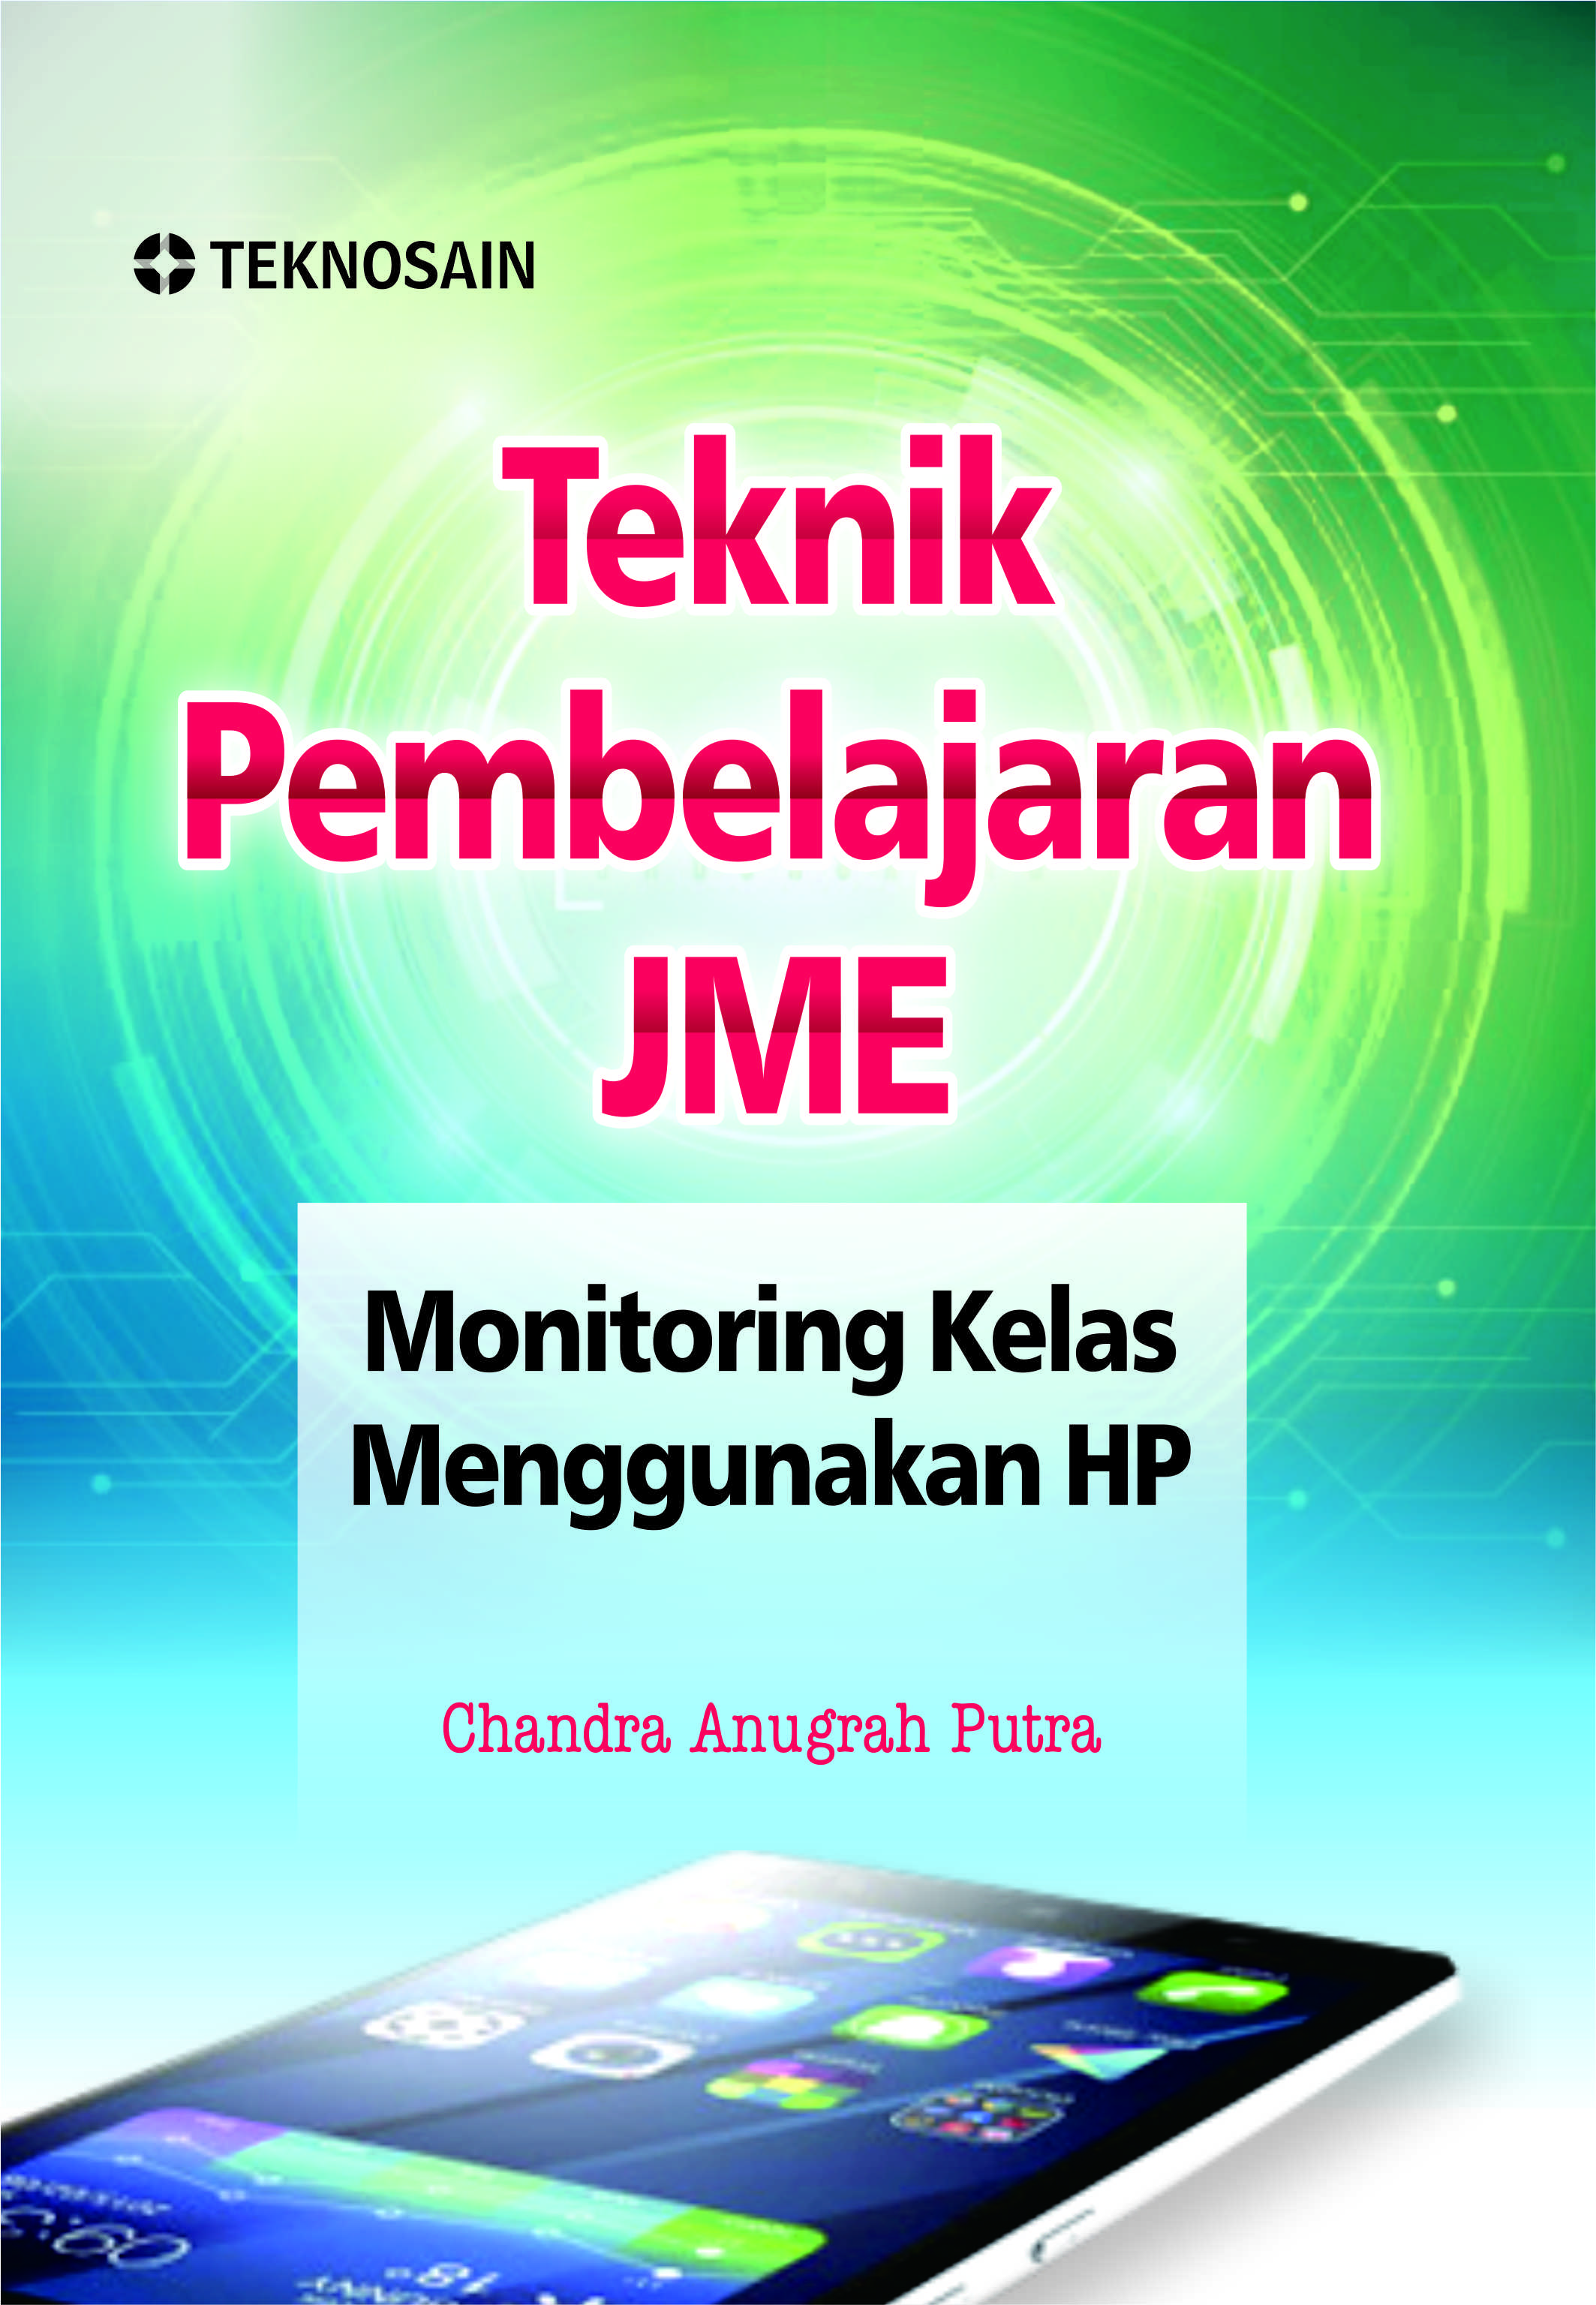 Teknik Teknologi Pembelajaran JME Monitoring Kelas Menggunakan HP